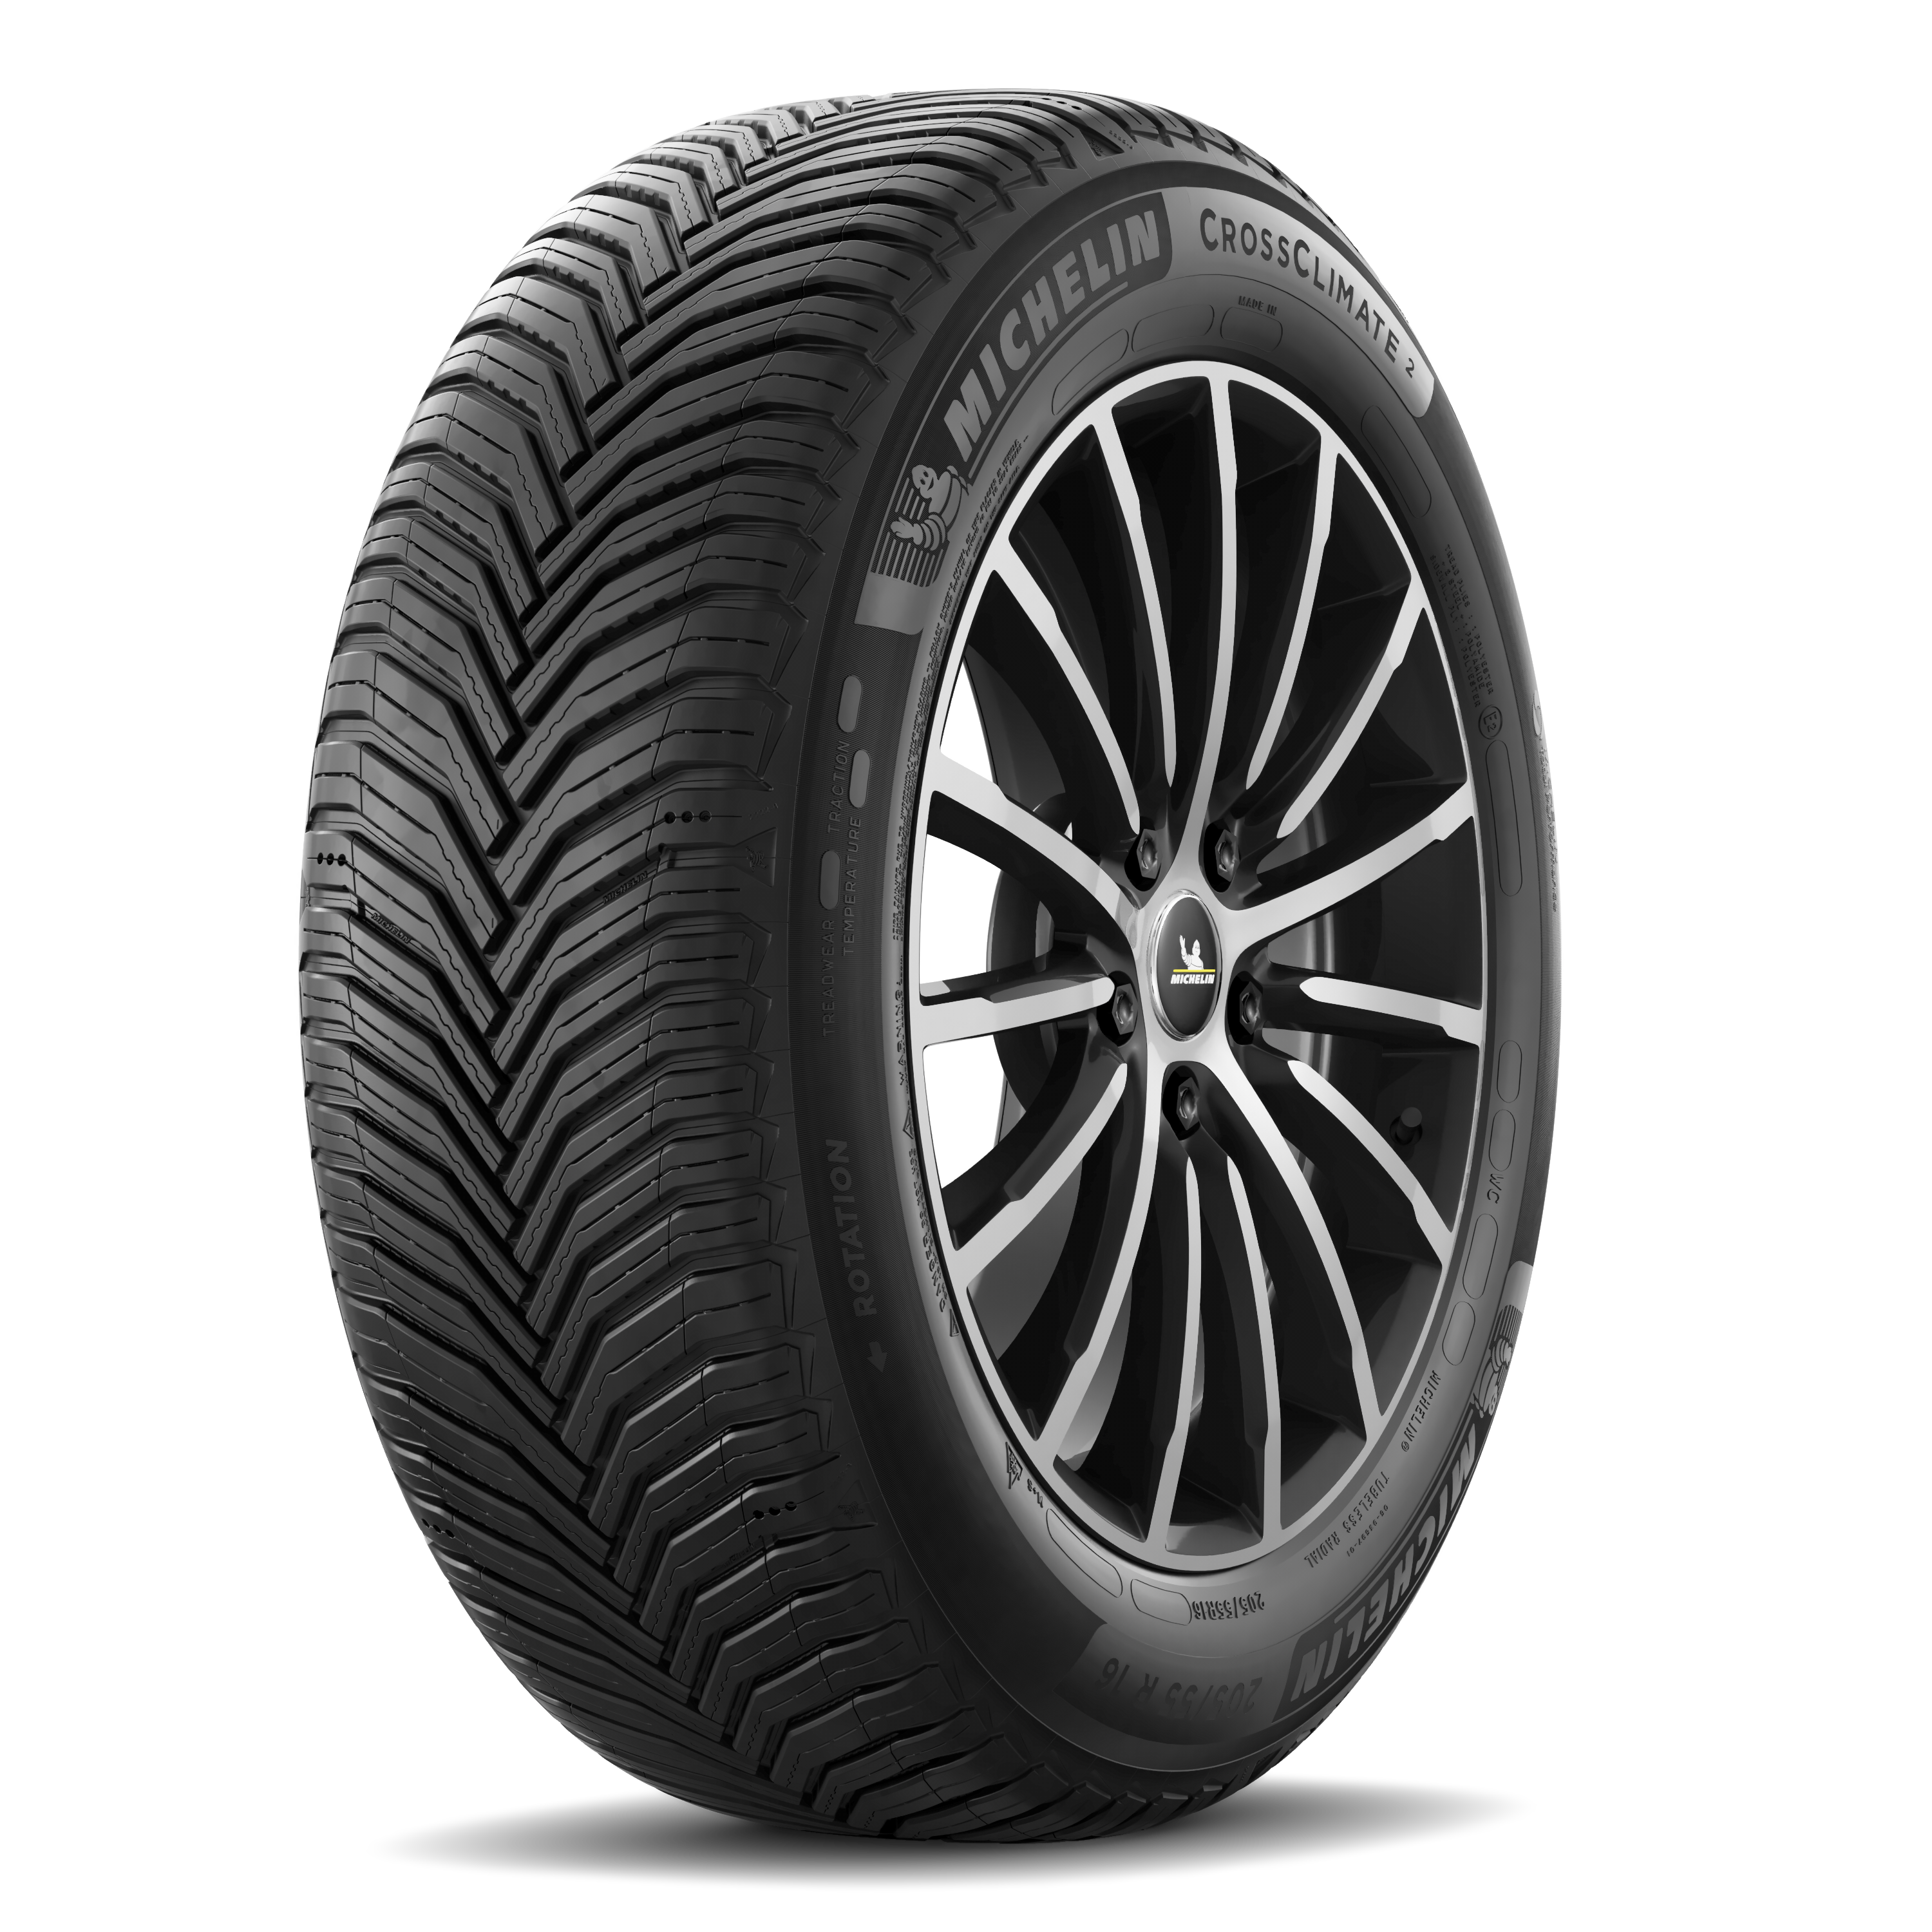 Gomme Nuove Michelin 225/65 R17 106V CROSS CLIMATE-2 XL M+S pneumatici nuovi All Season